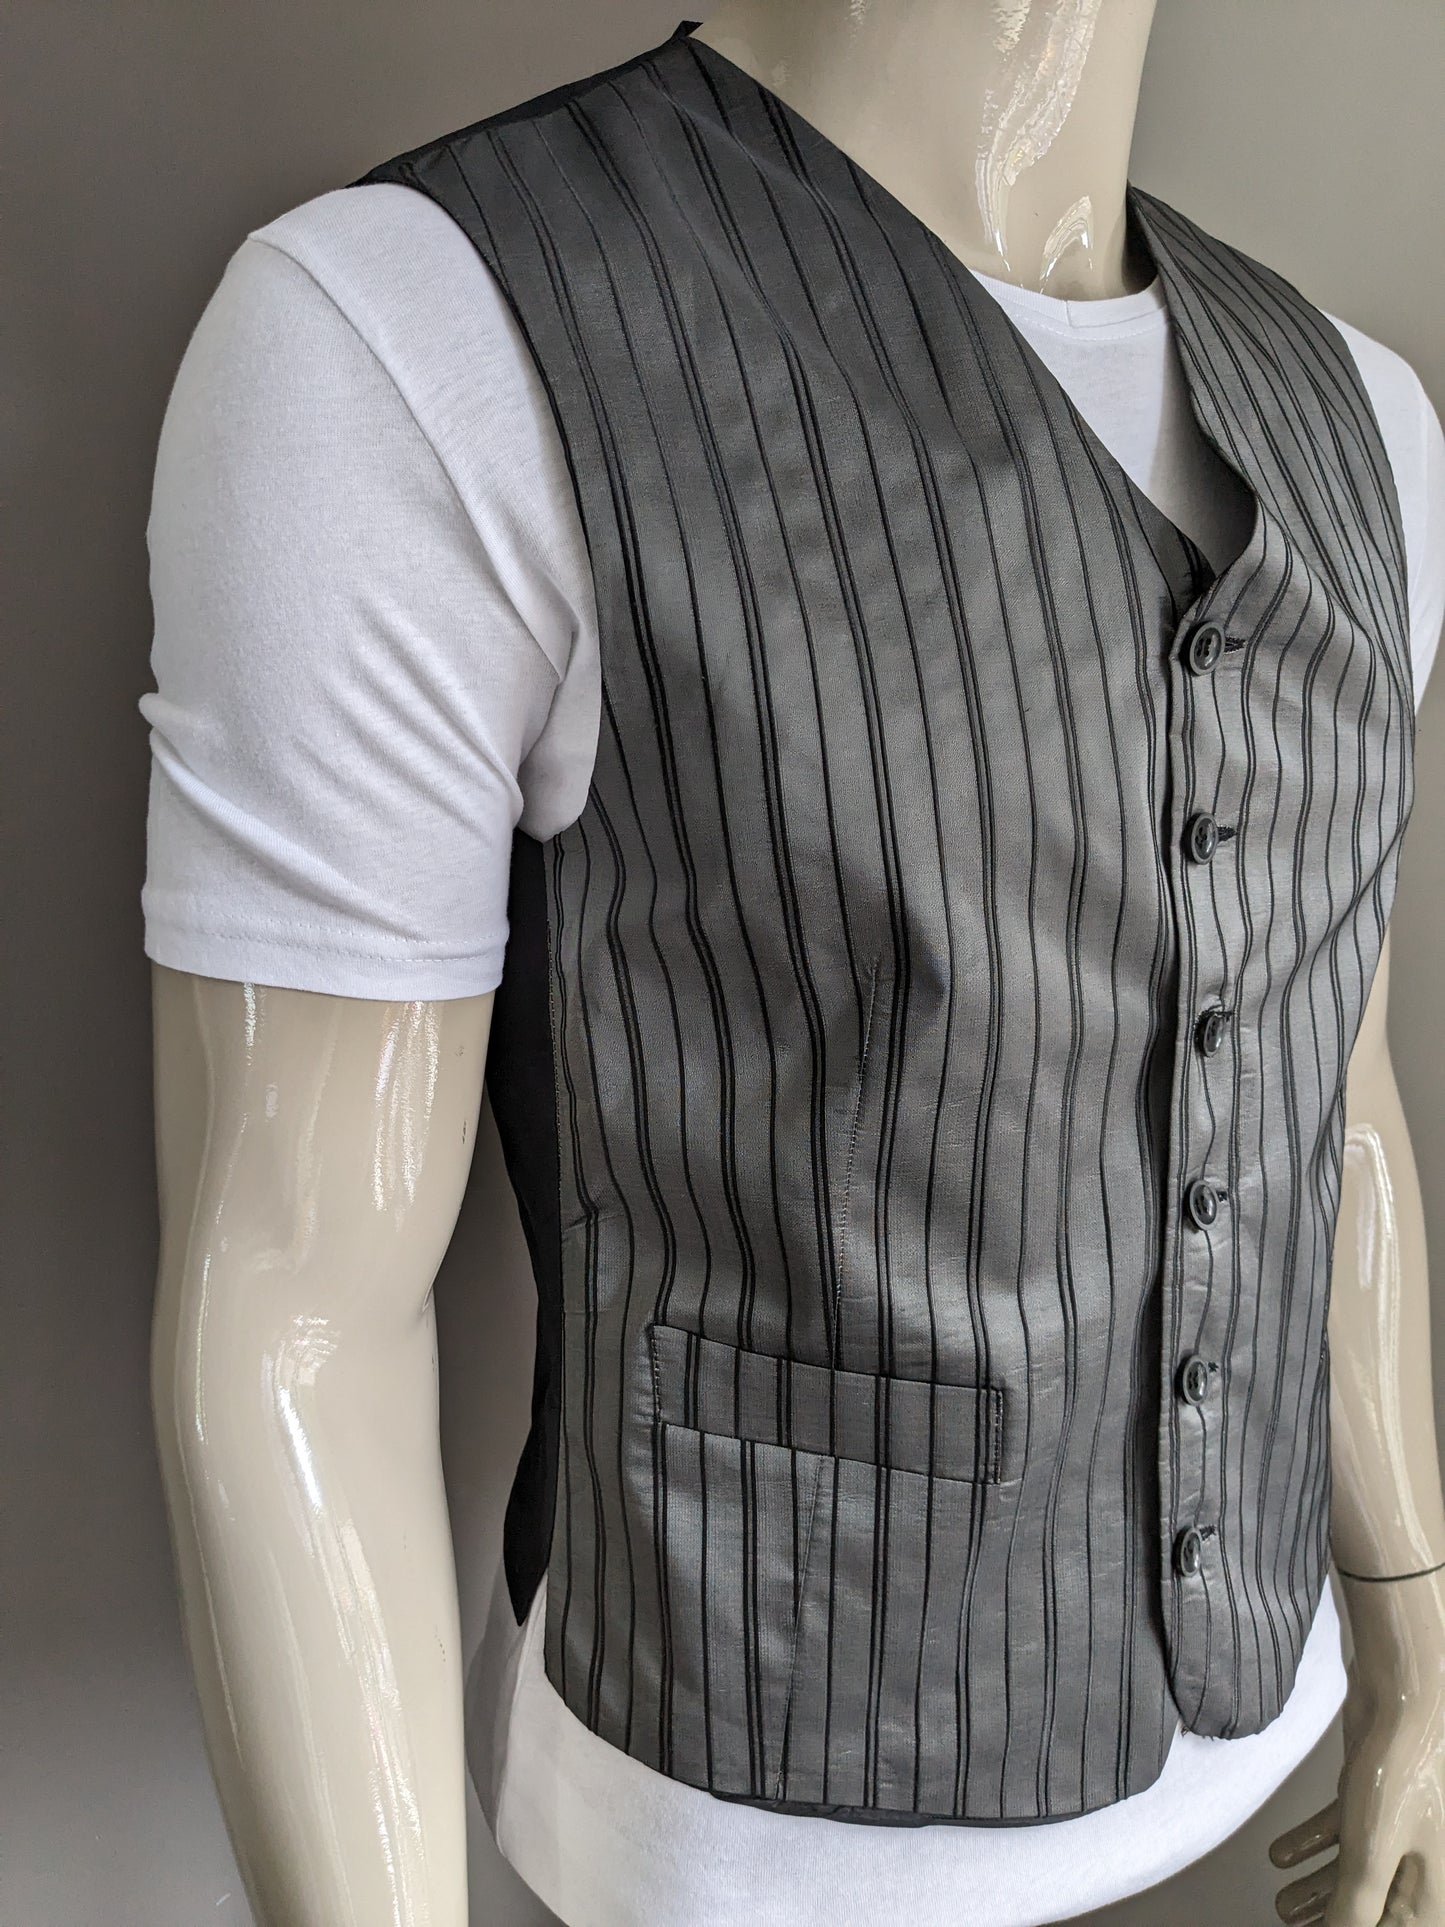 Waistcoat. Gray metallic black striped. Size 23 (46 / s).